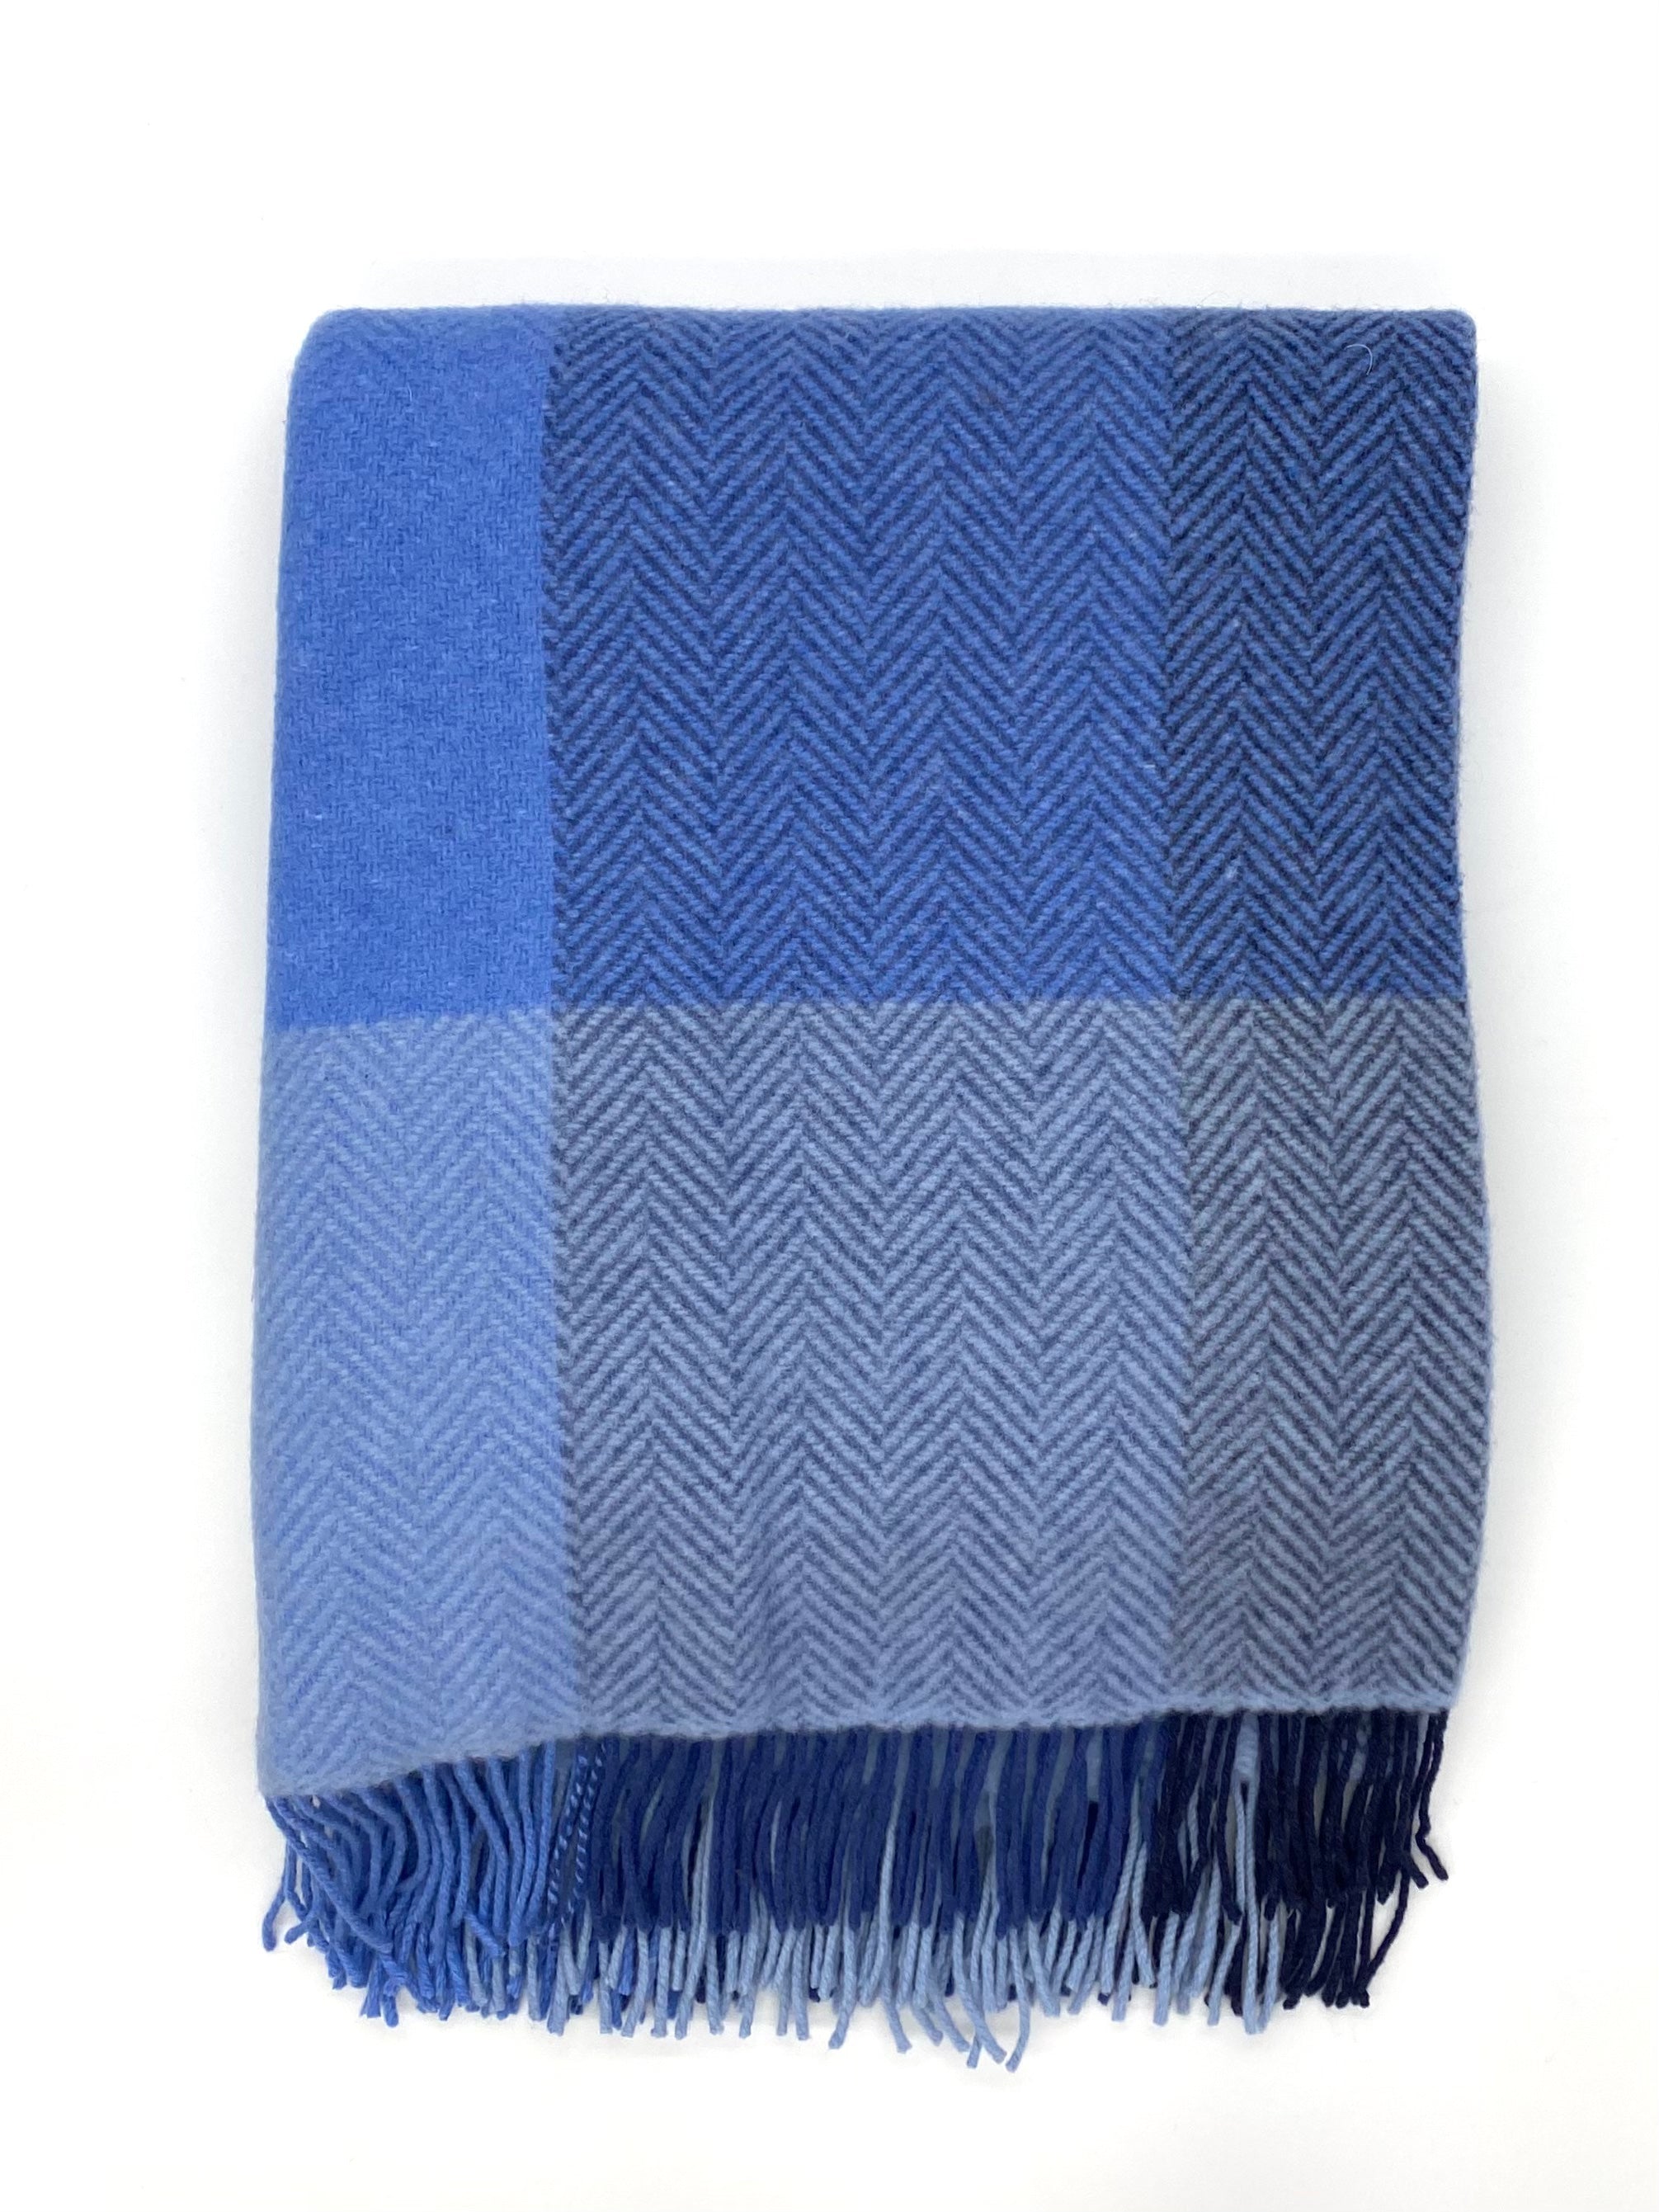 Merino Wool and Cashmere Throw - Navy/ Blue Block